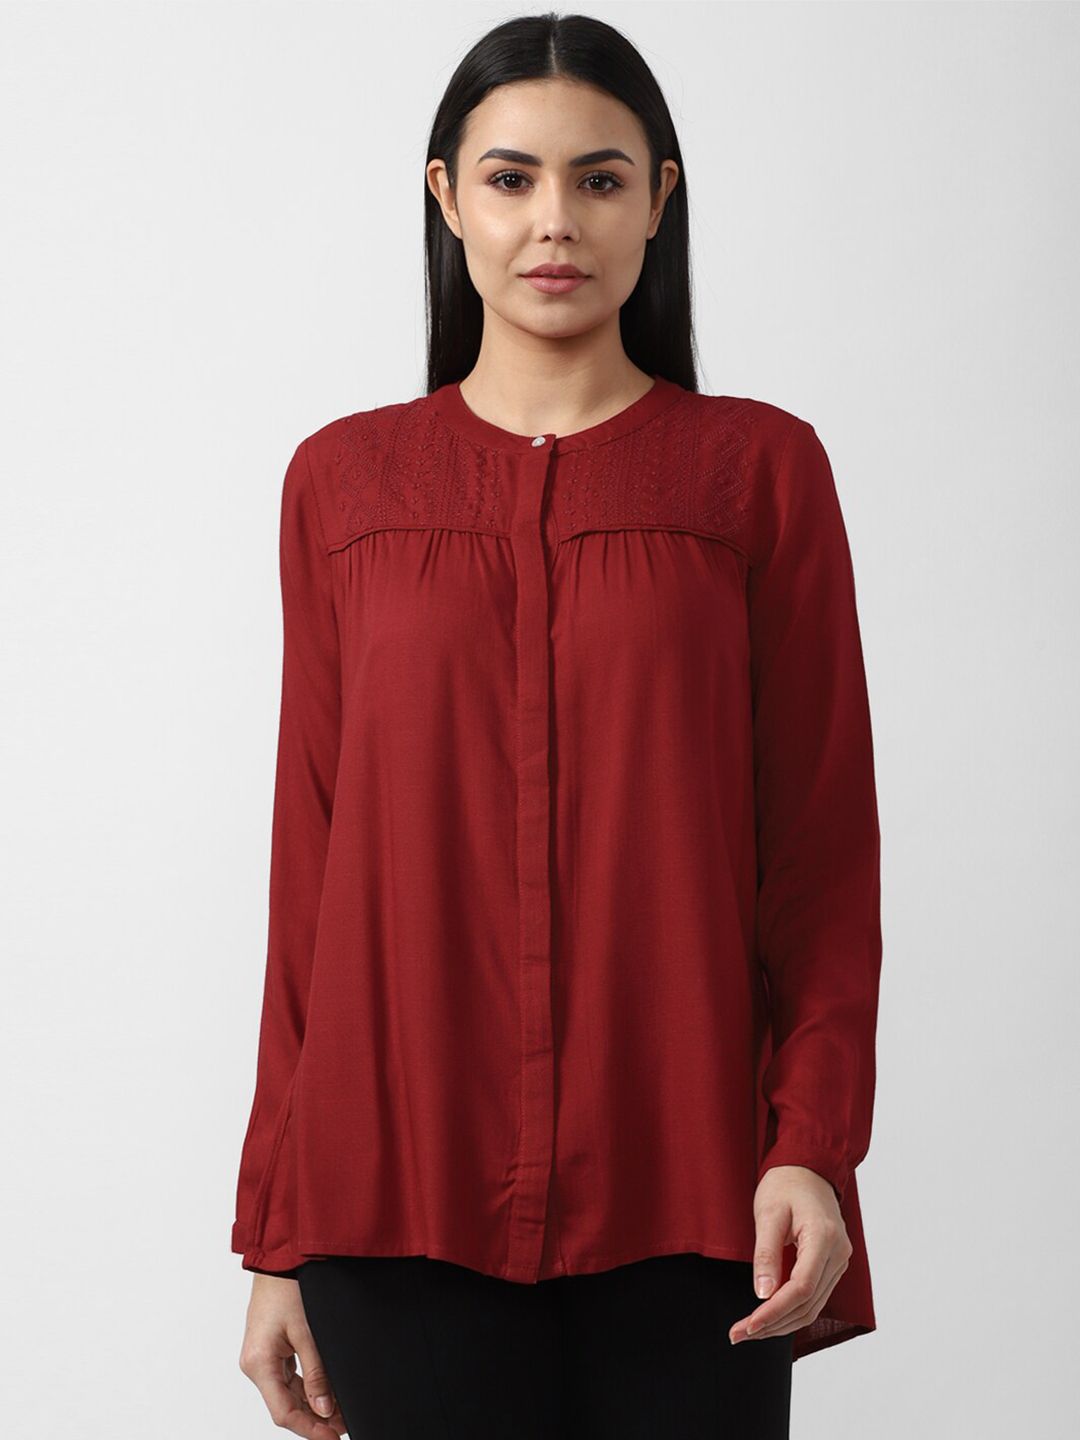 Van Heusen Woman Maroon Mandarin Collar Applique Shirt Style Top Price in India